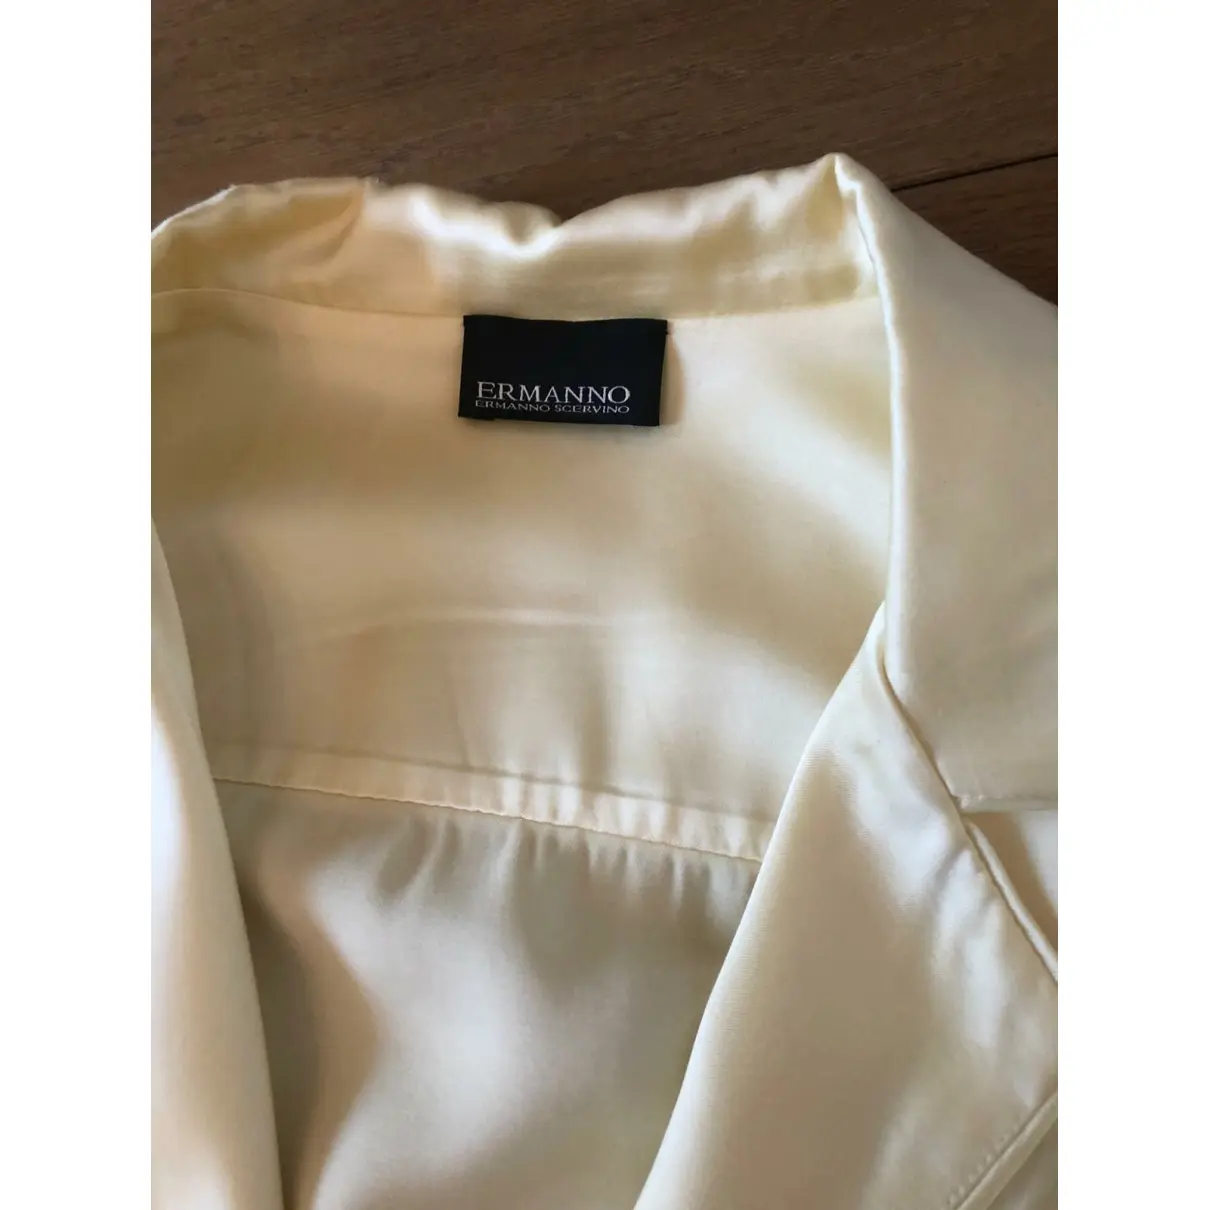 Buy Ermanno Scervino Shirt online